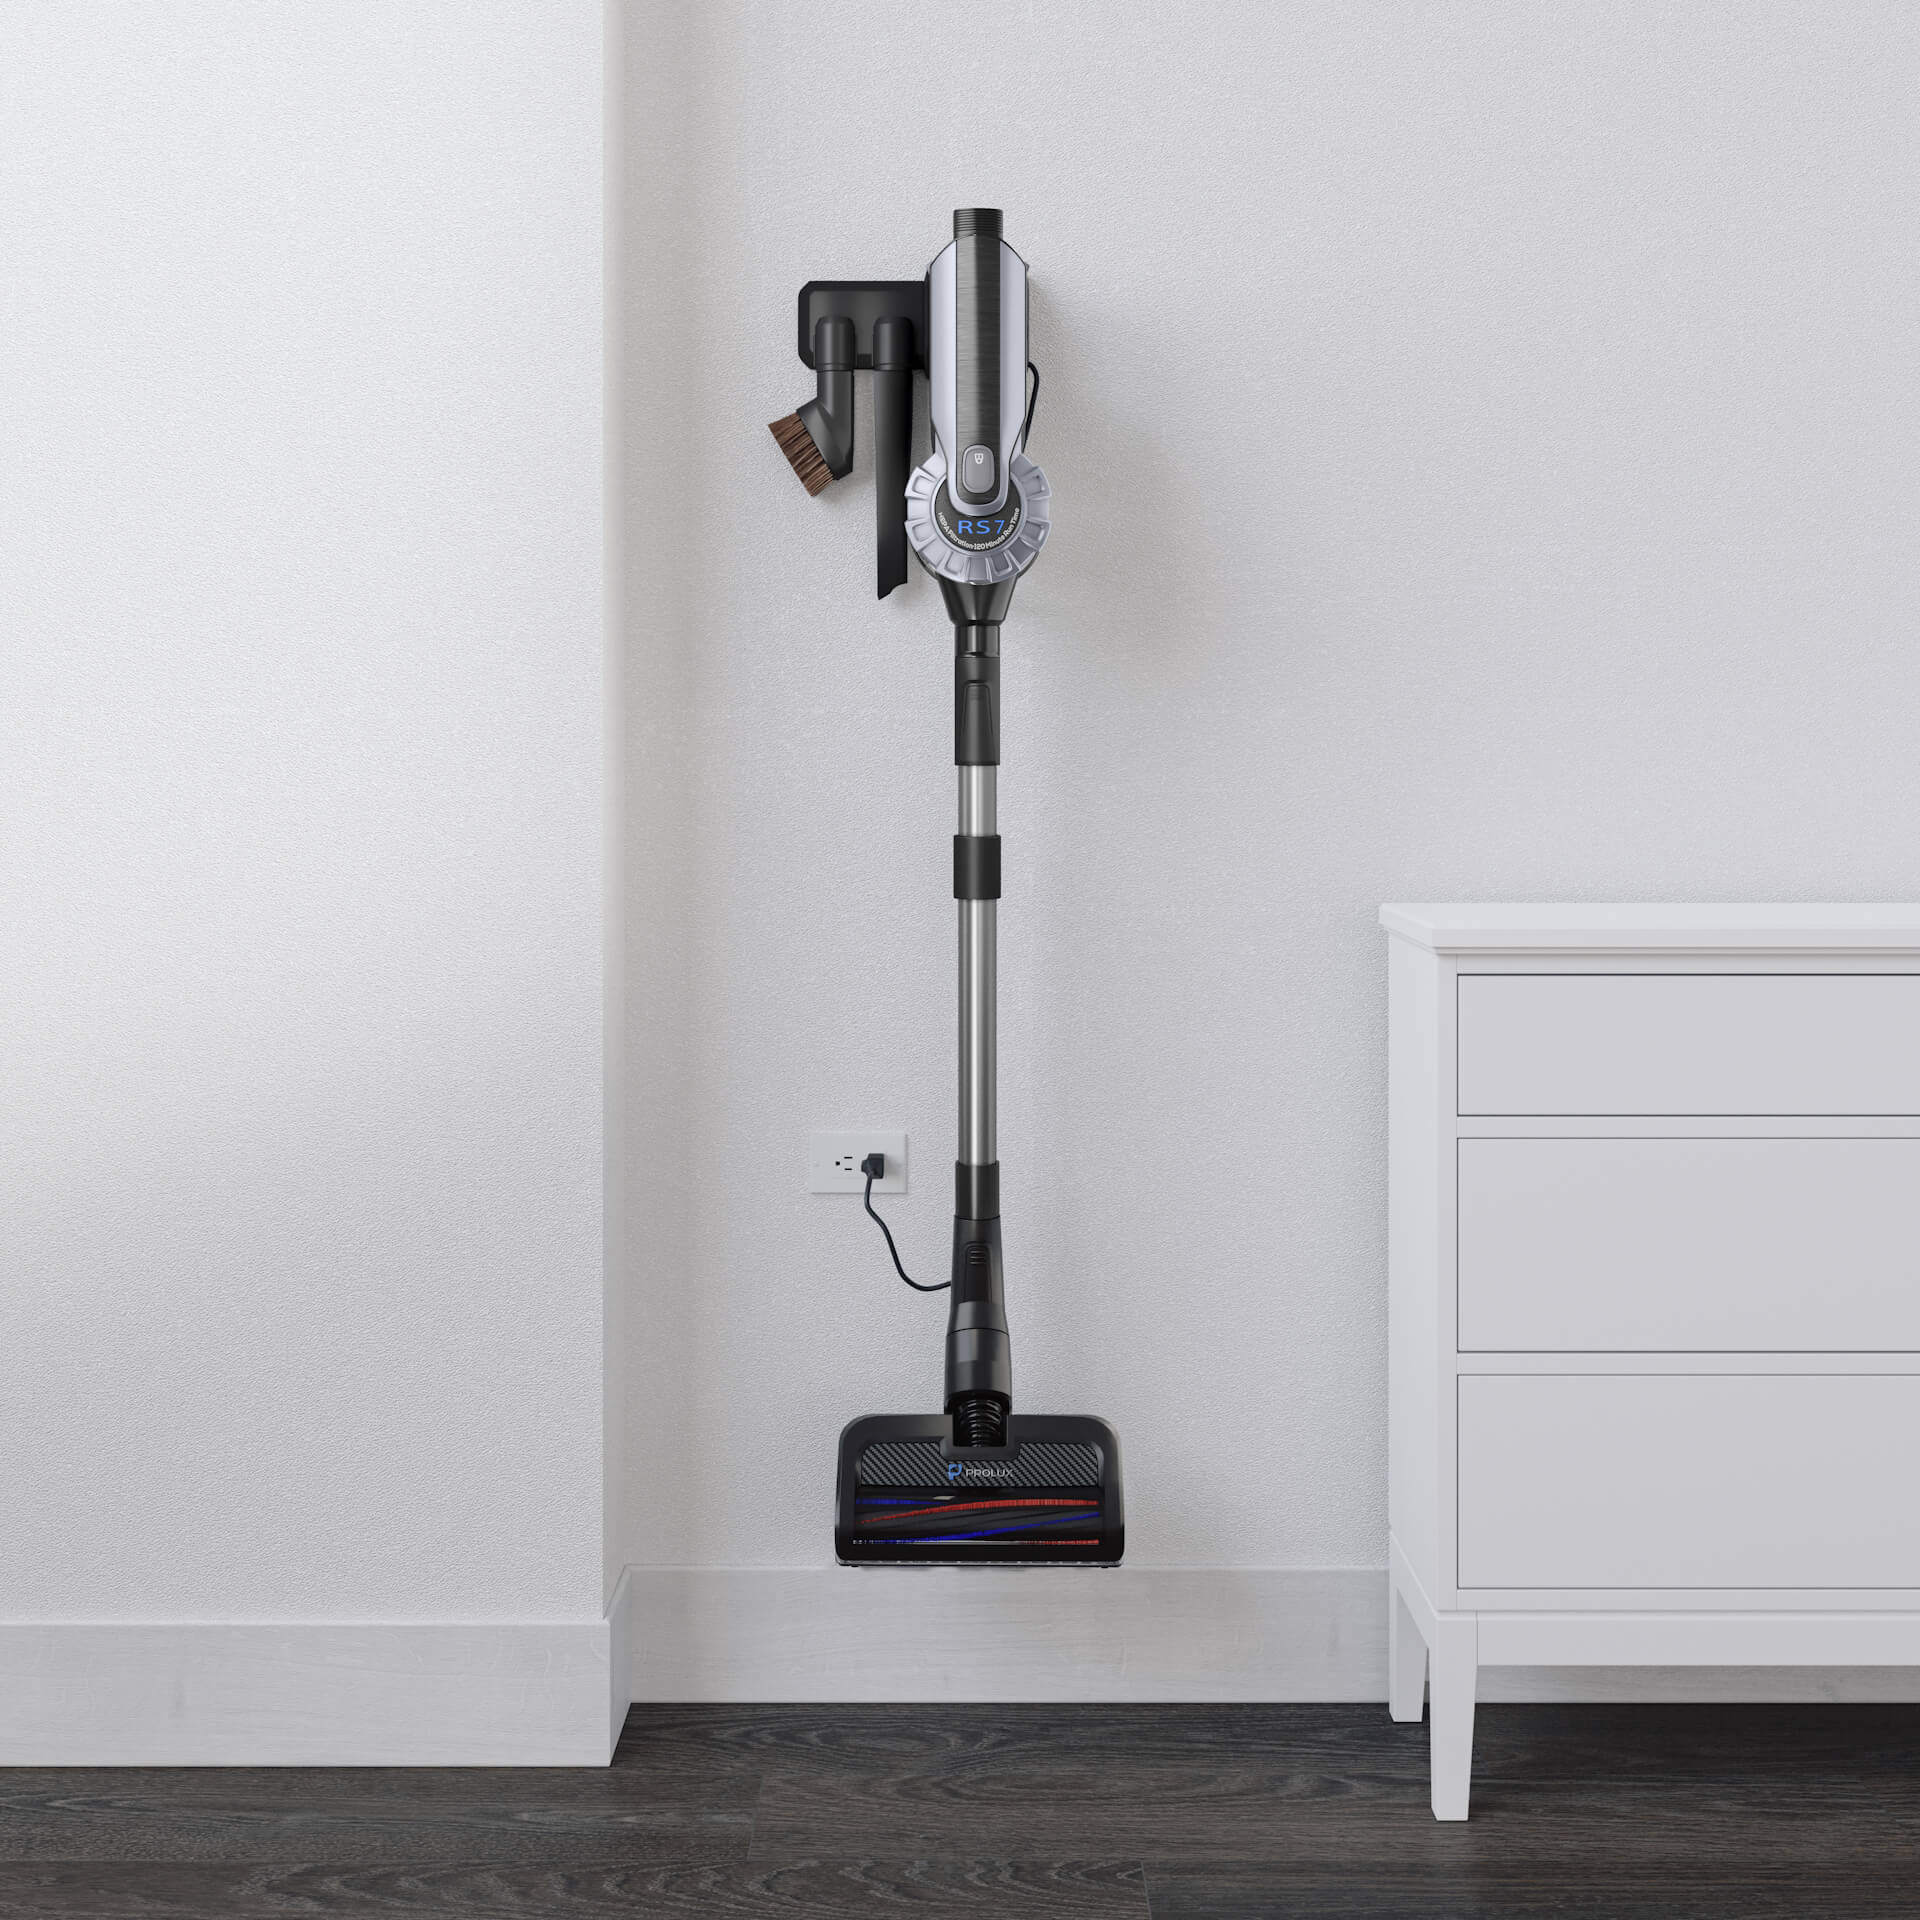 Vacuum Cleaner Lifestyle 3D Render: Final Result